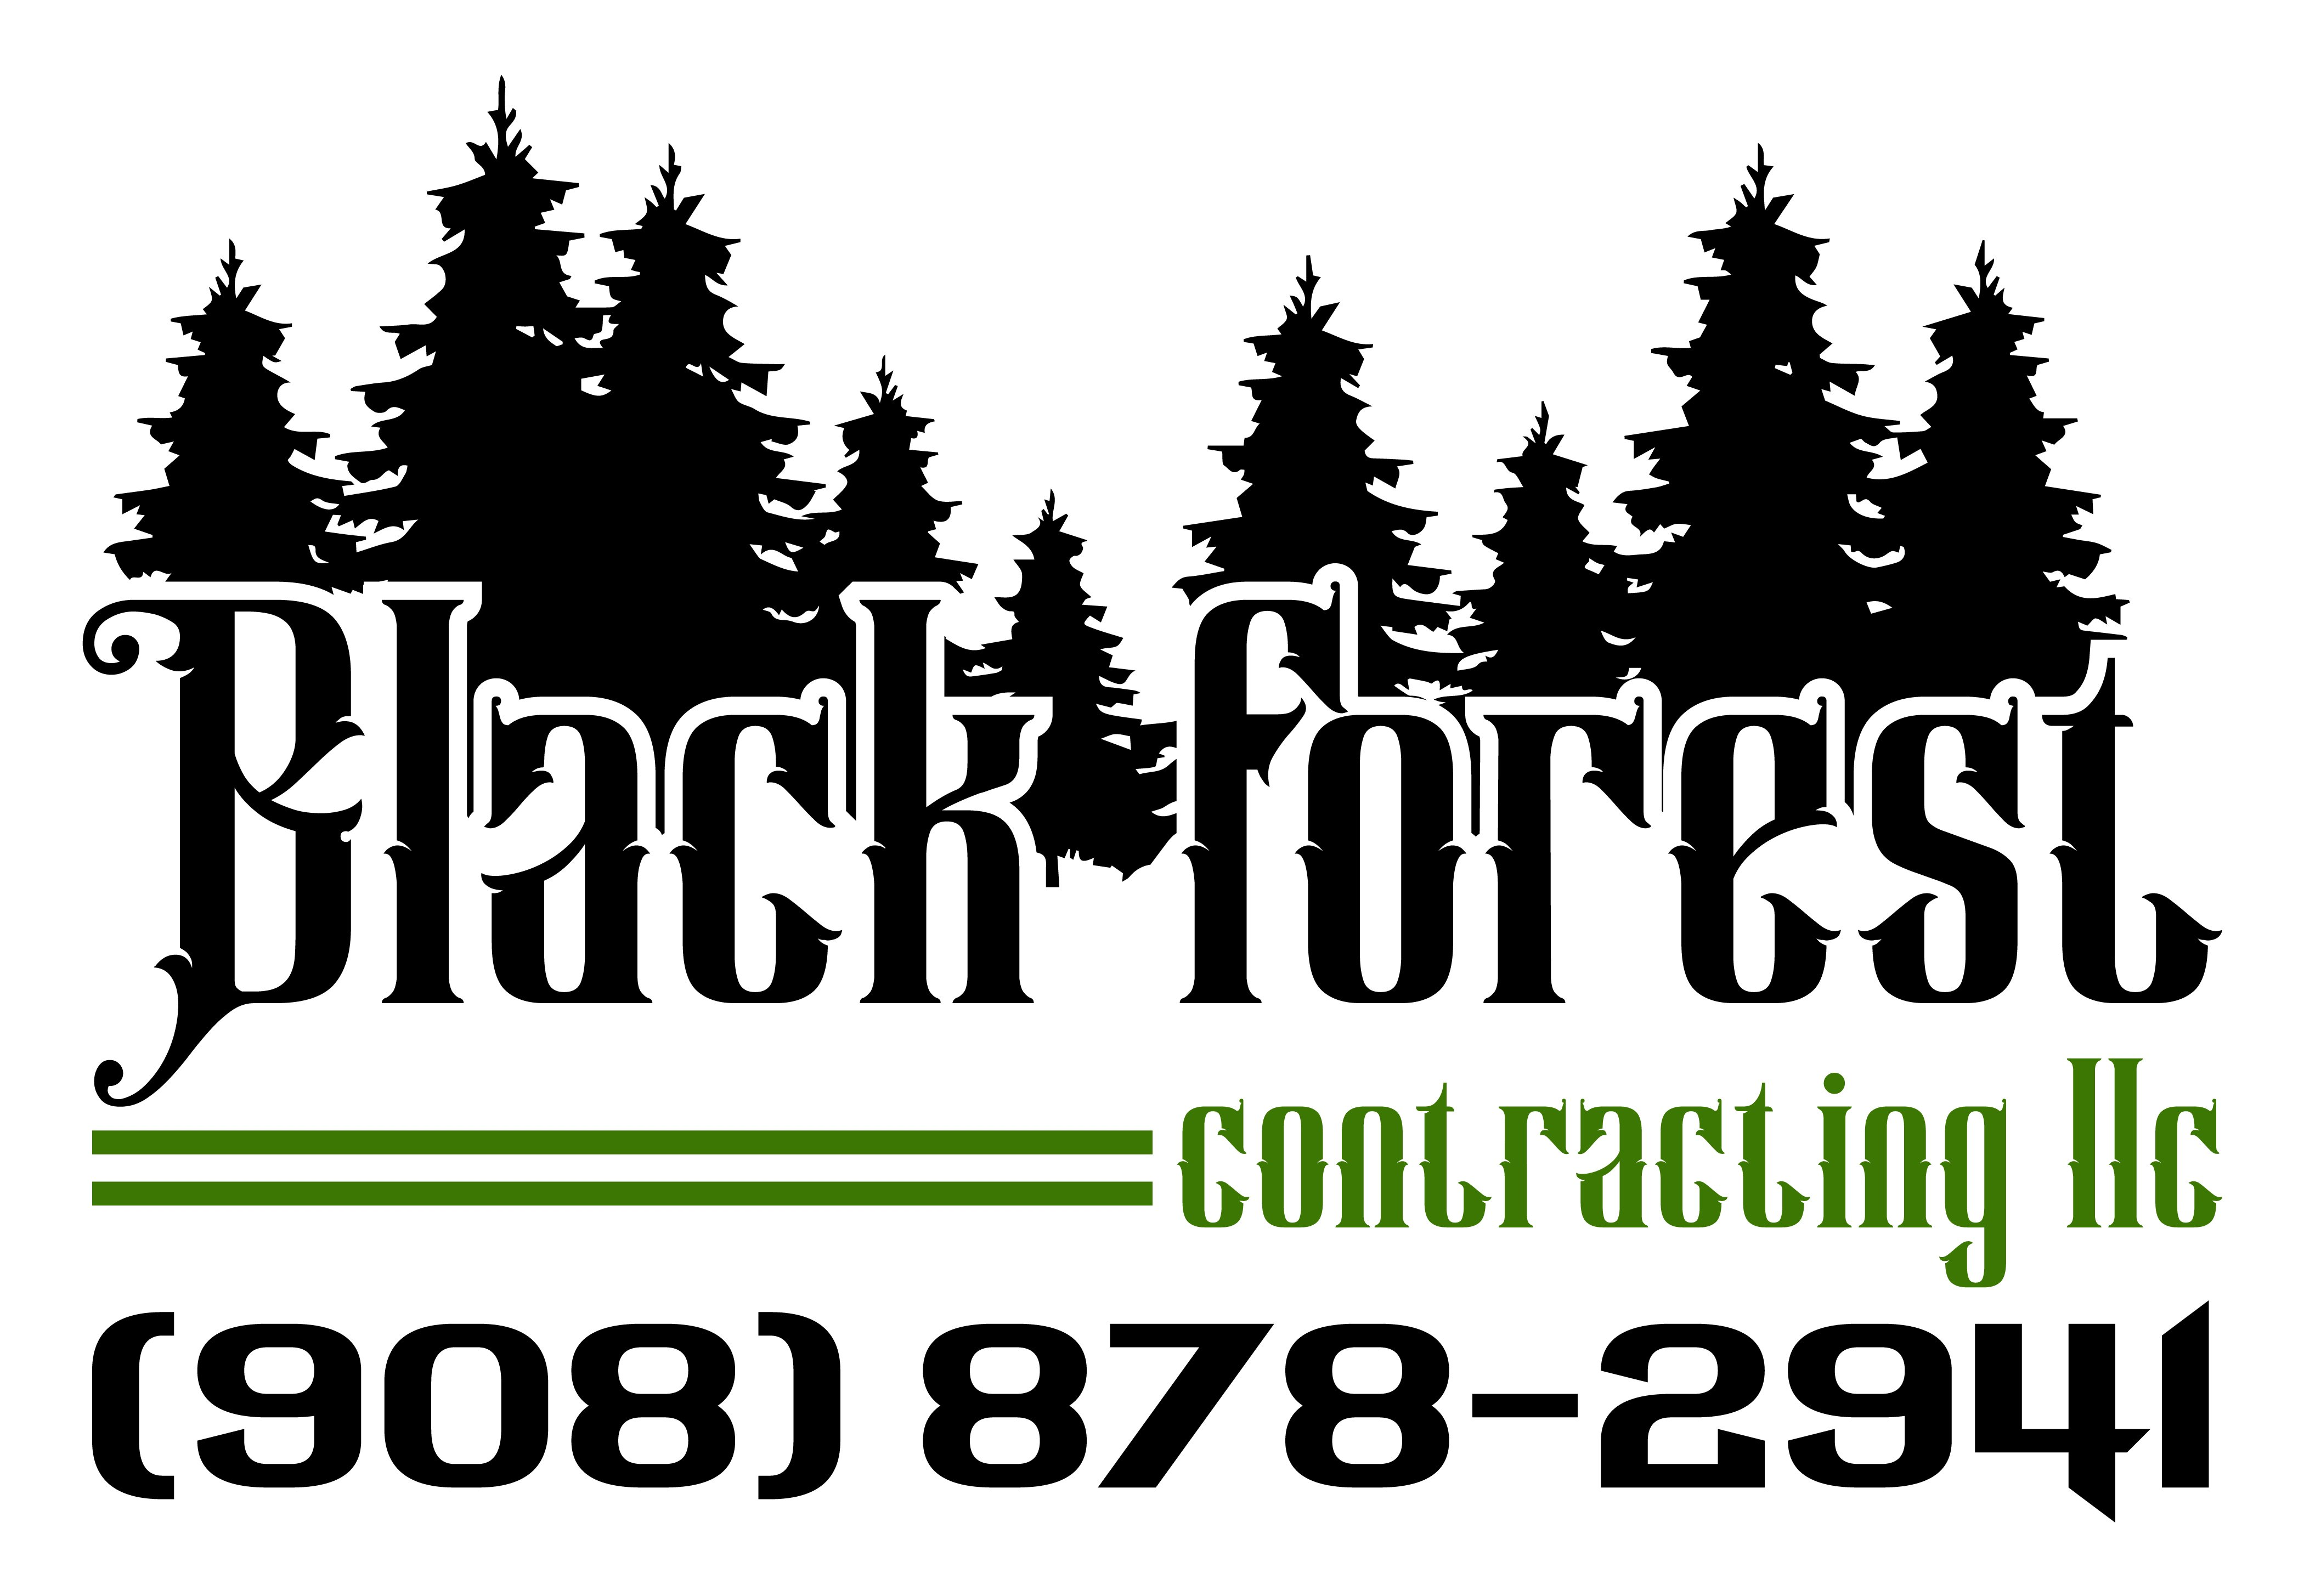 BLACK FOREST